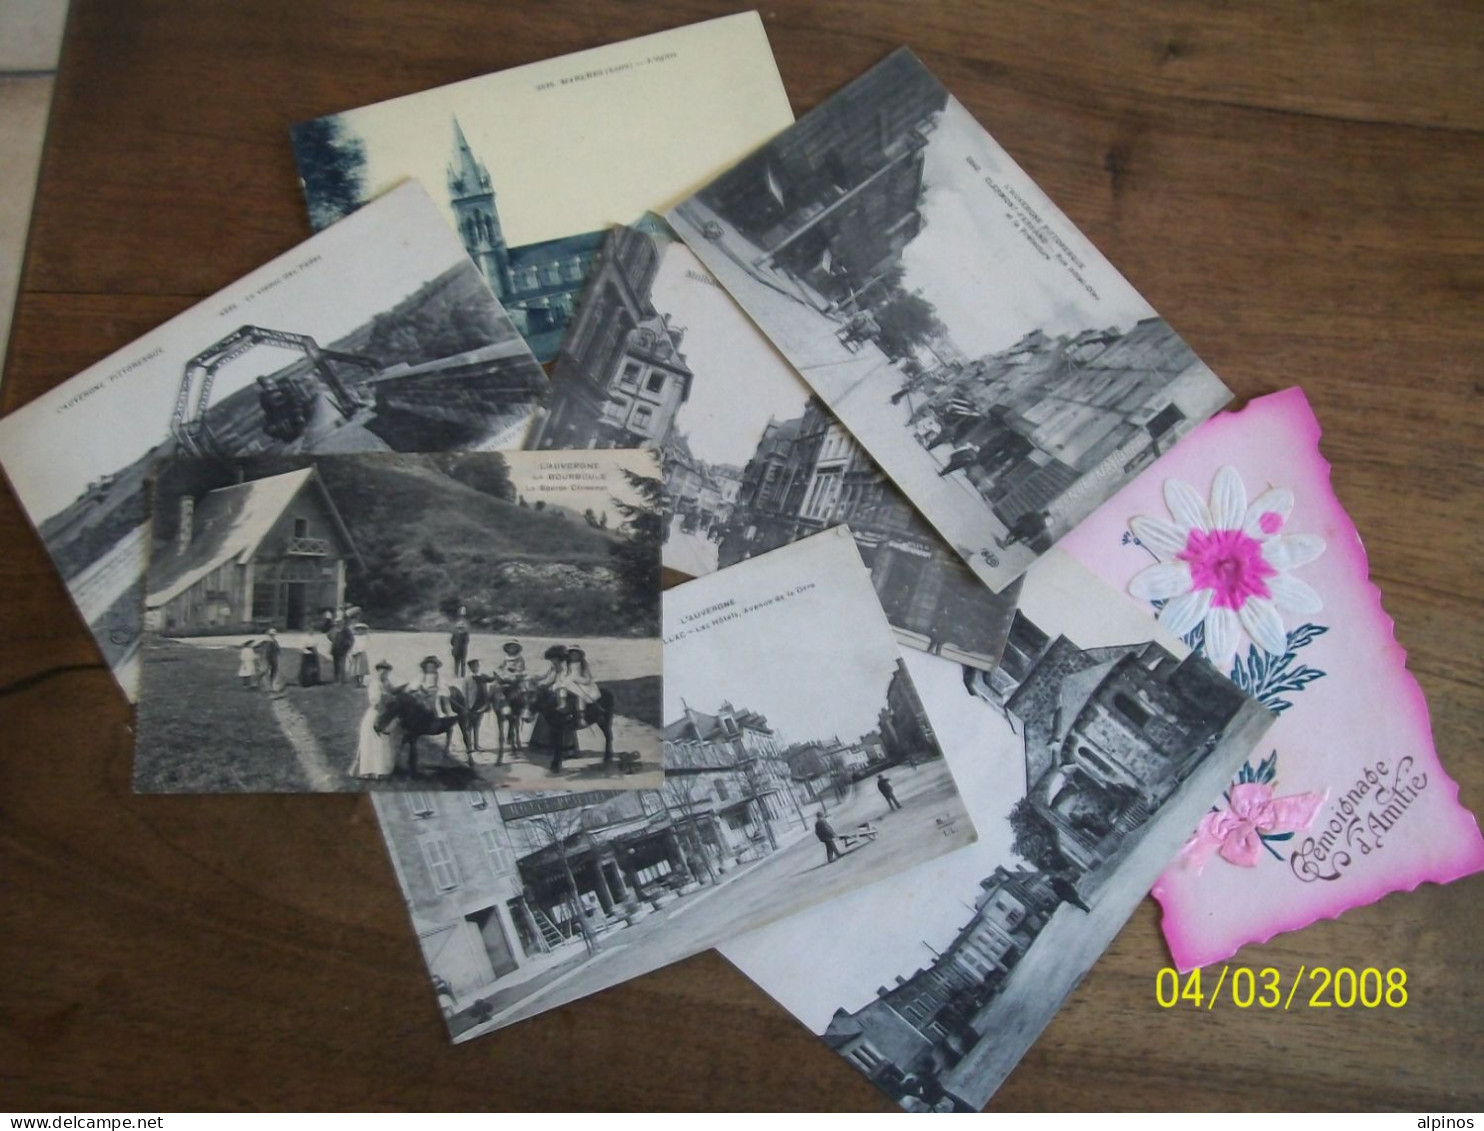 Gros Lot De Cartes Postales Anciennes - 500 Postcards Min.